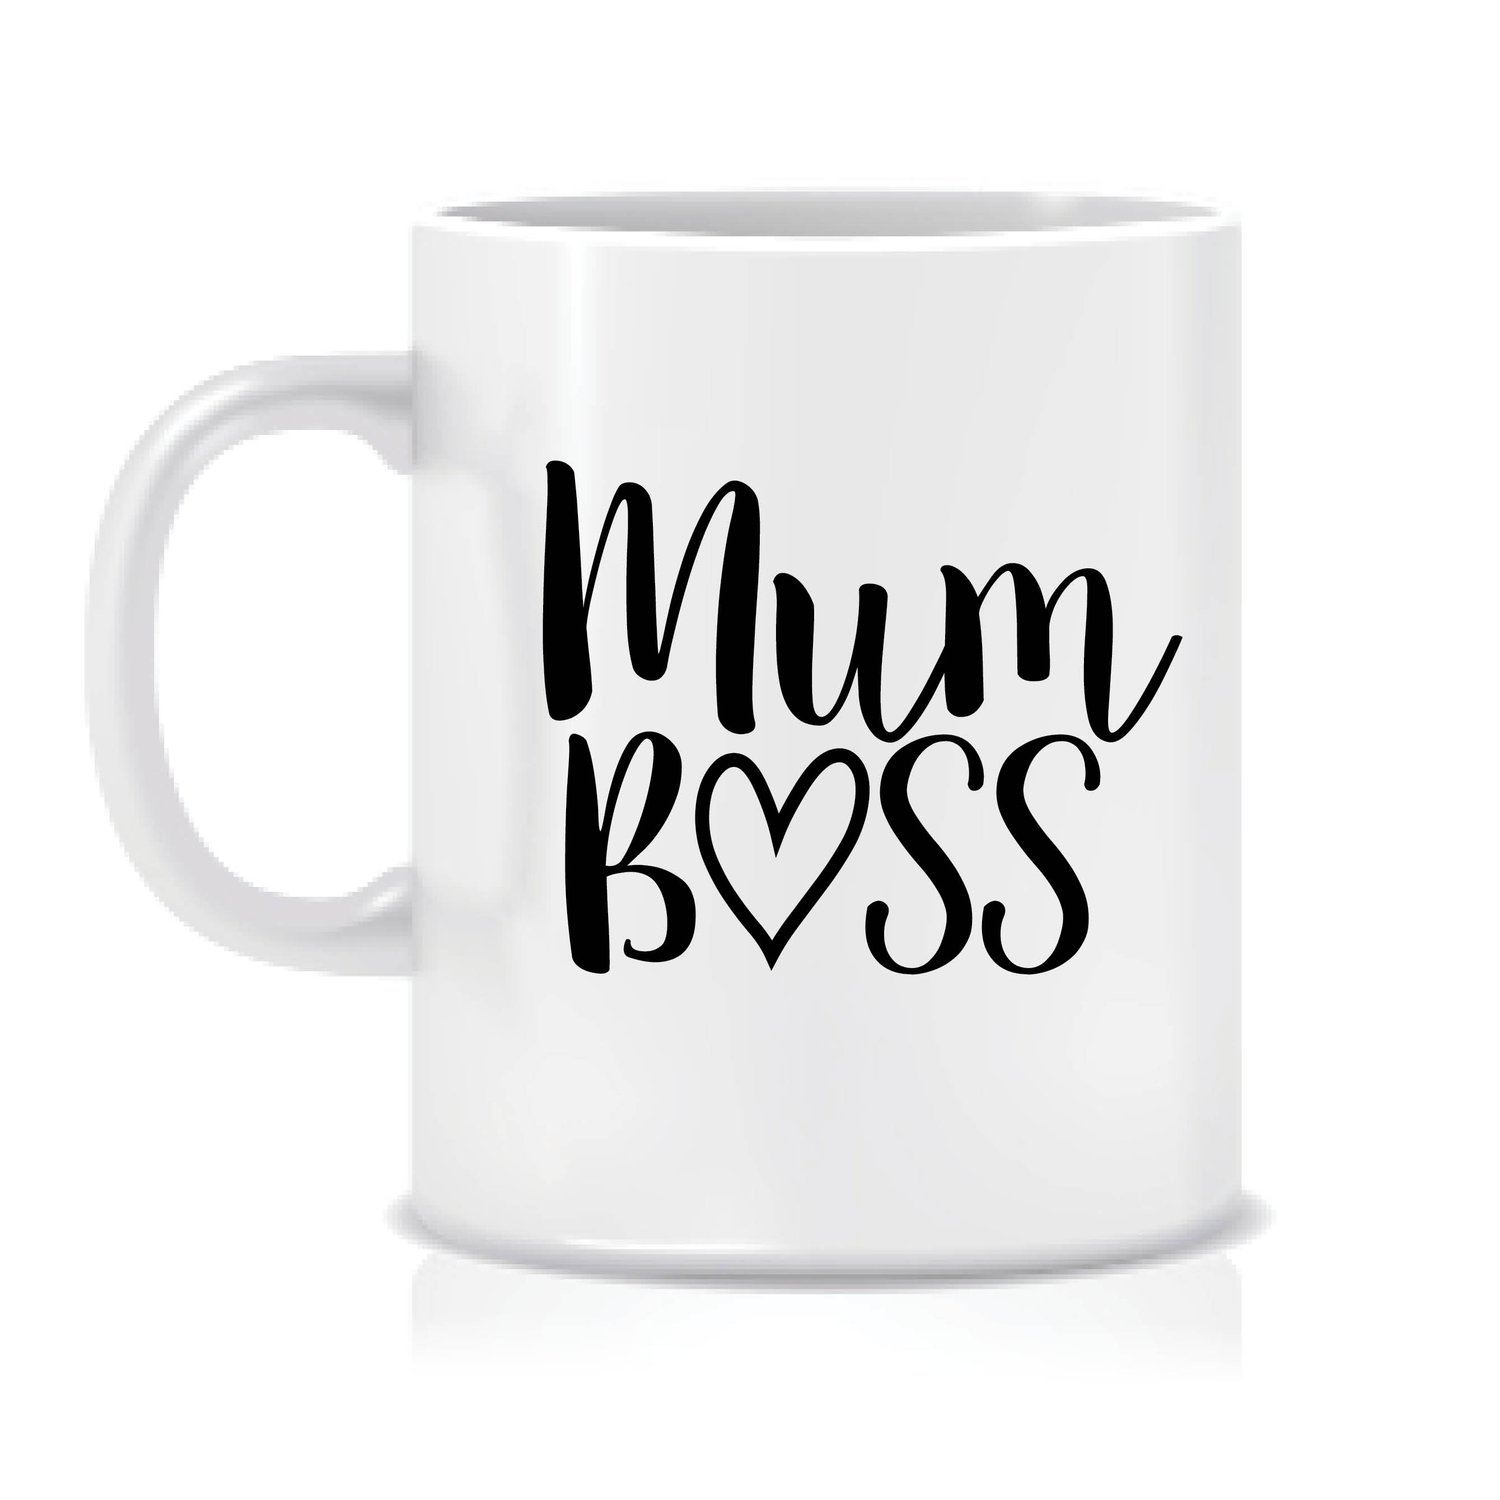 Image of Mum Boss coffee mug